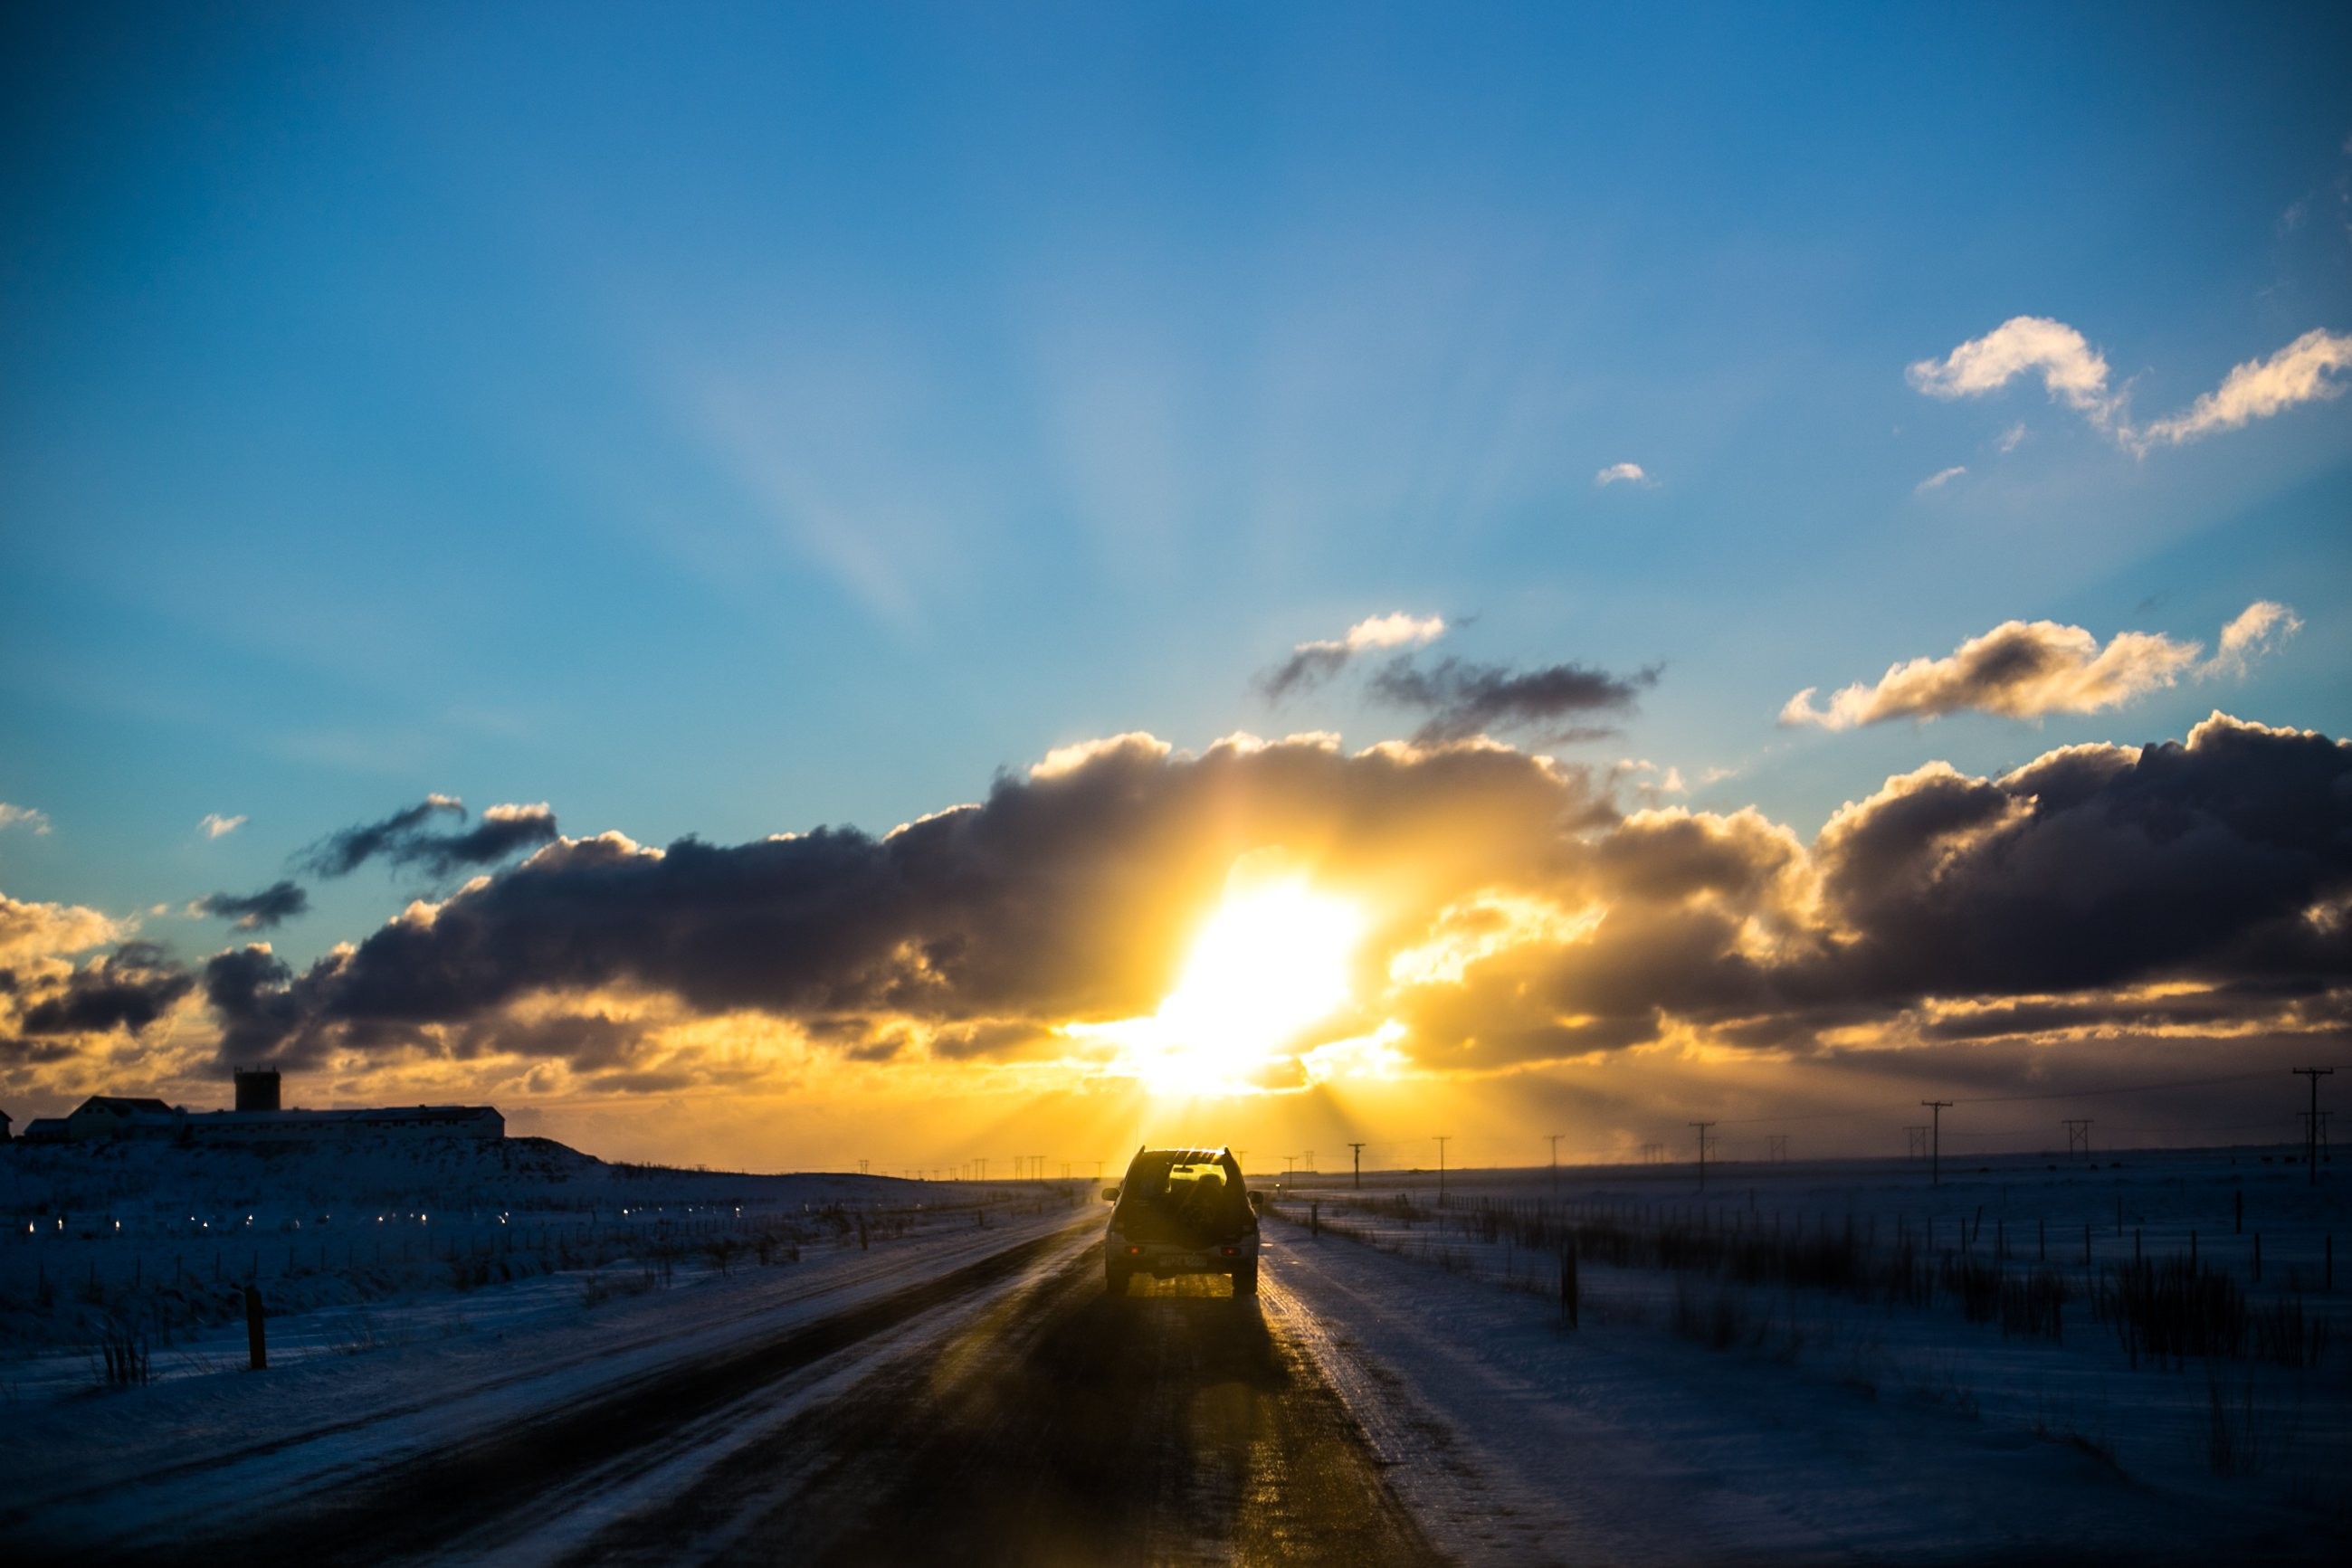 Foto Sunset Di Islandia Highway